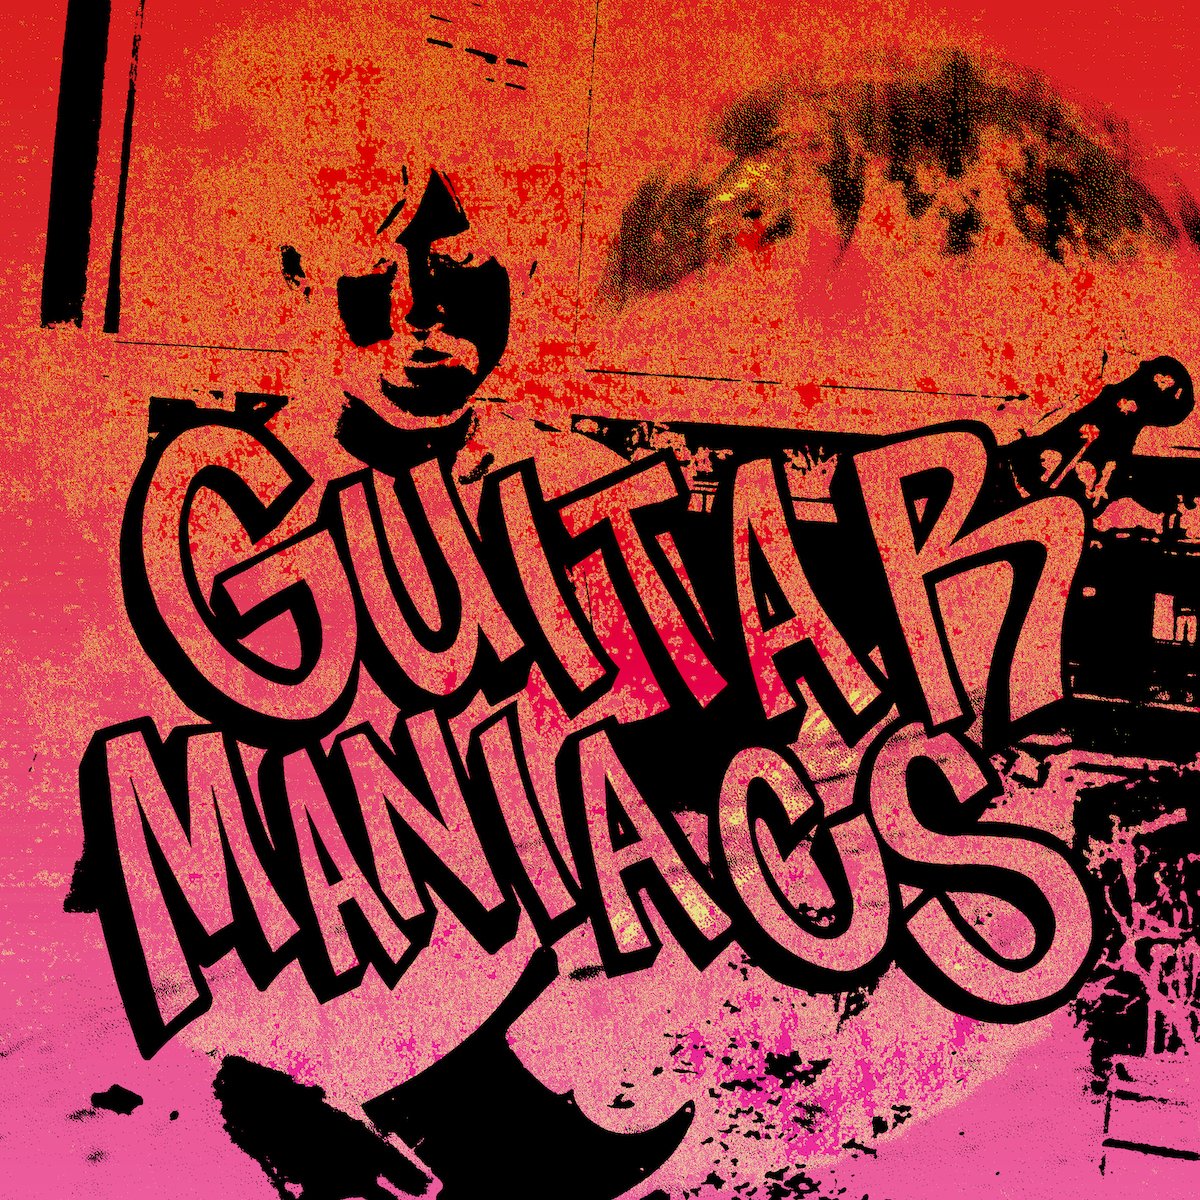 Eliot Lipp - Guitar Maniacs – $1.00